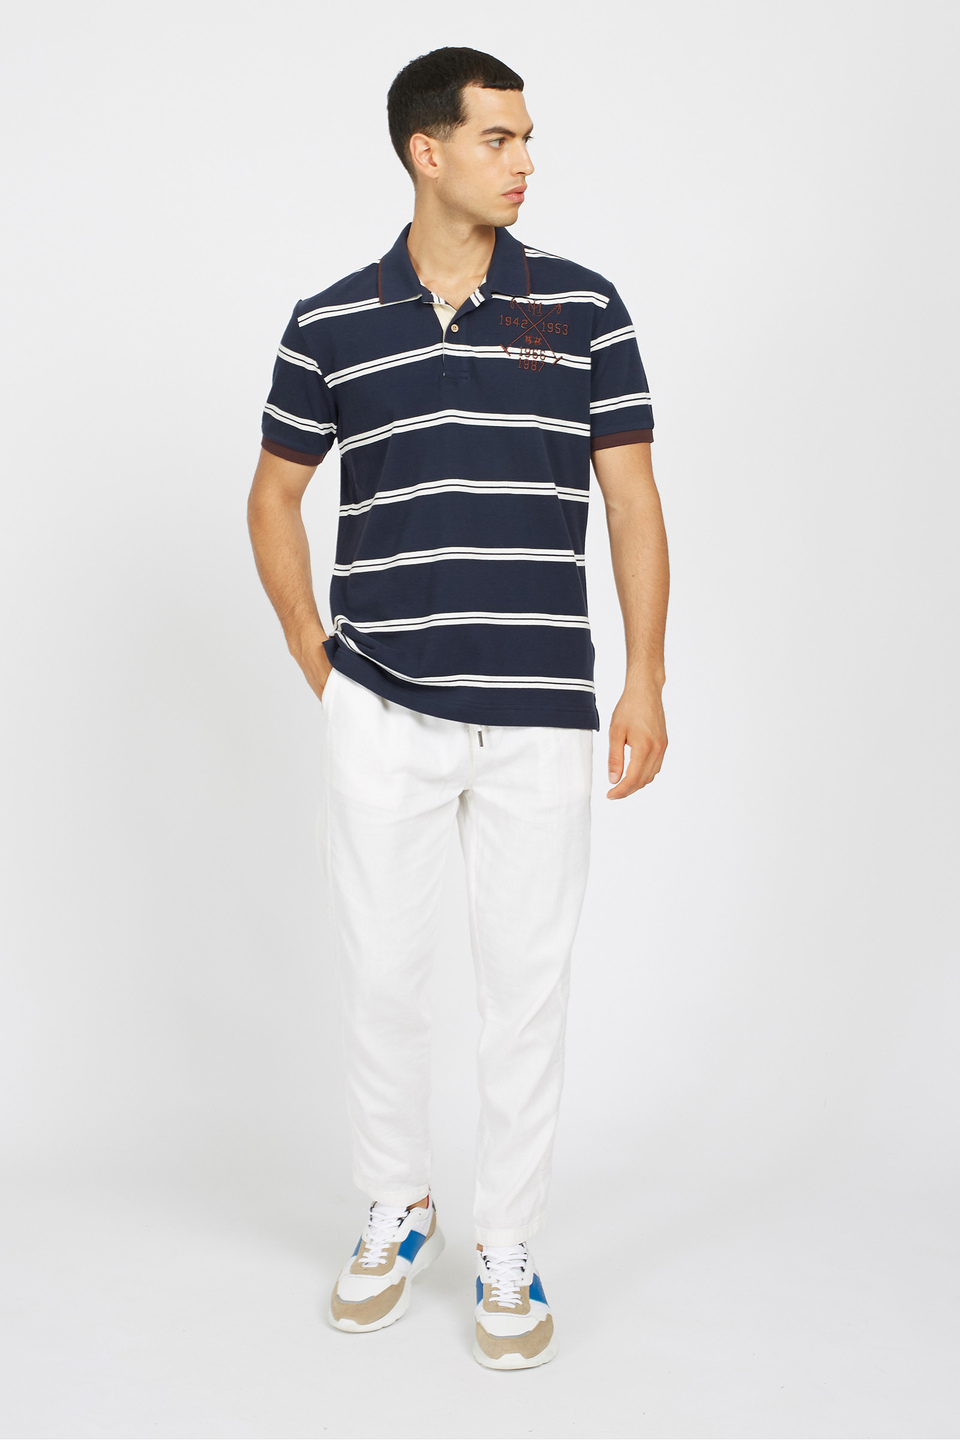 Regular fit 100% cotton short-sleeved polo shirt for men - Veleslav | La Martina - Official Online Shop